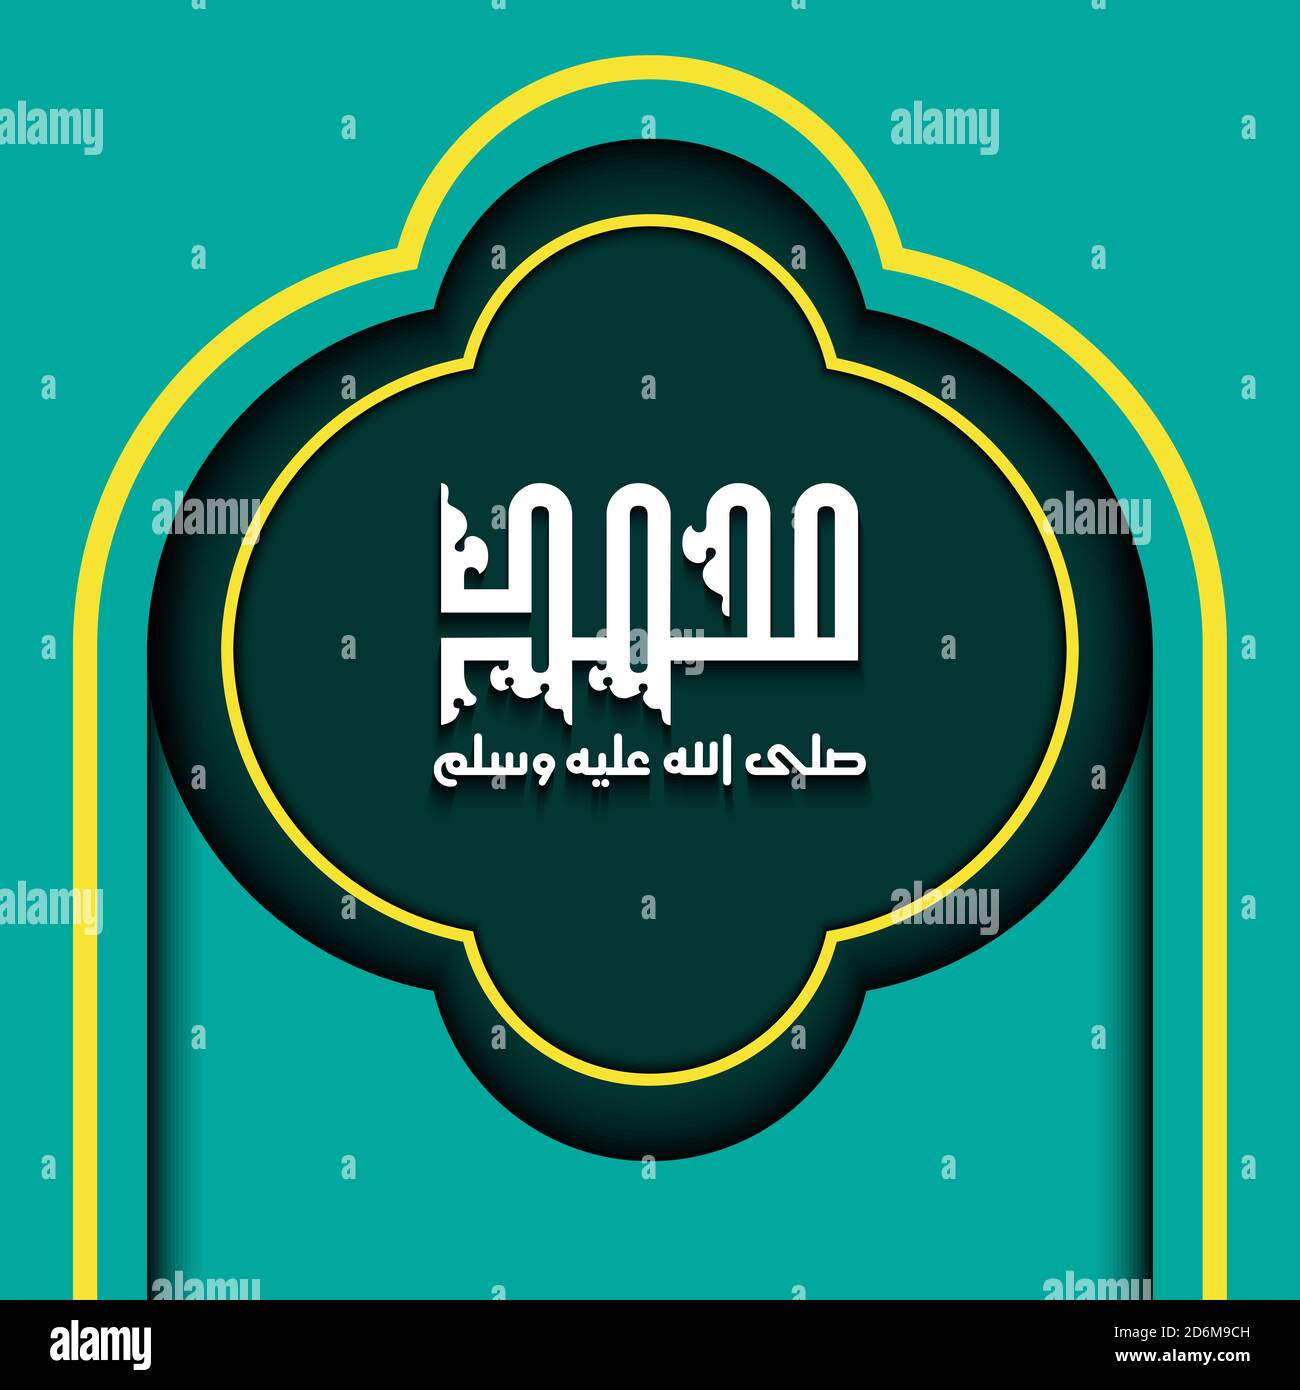 Prophet Muhammad Birthday islamic design with islamic motif pattern and calligraphy design vector Stock Photo